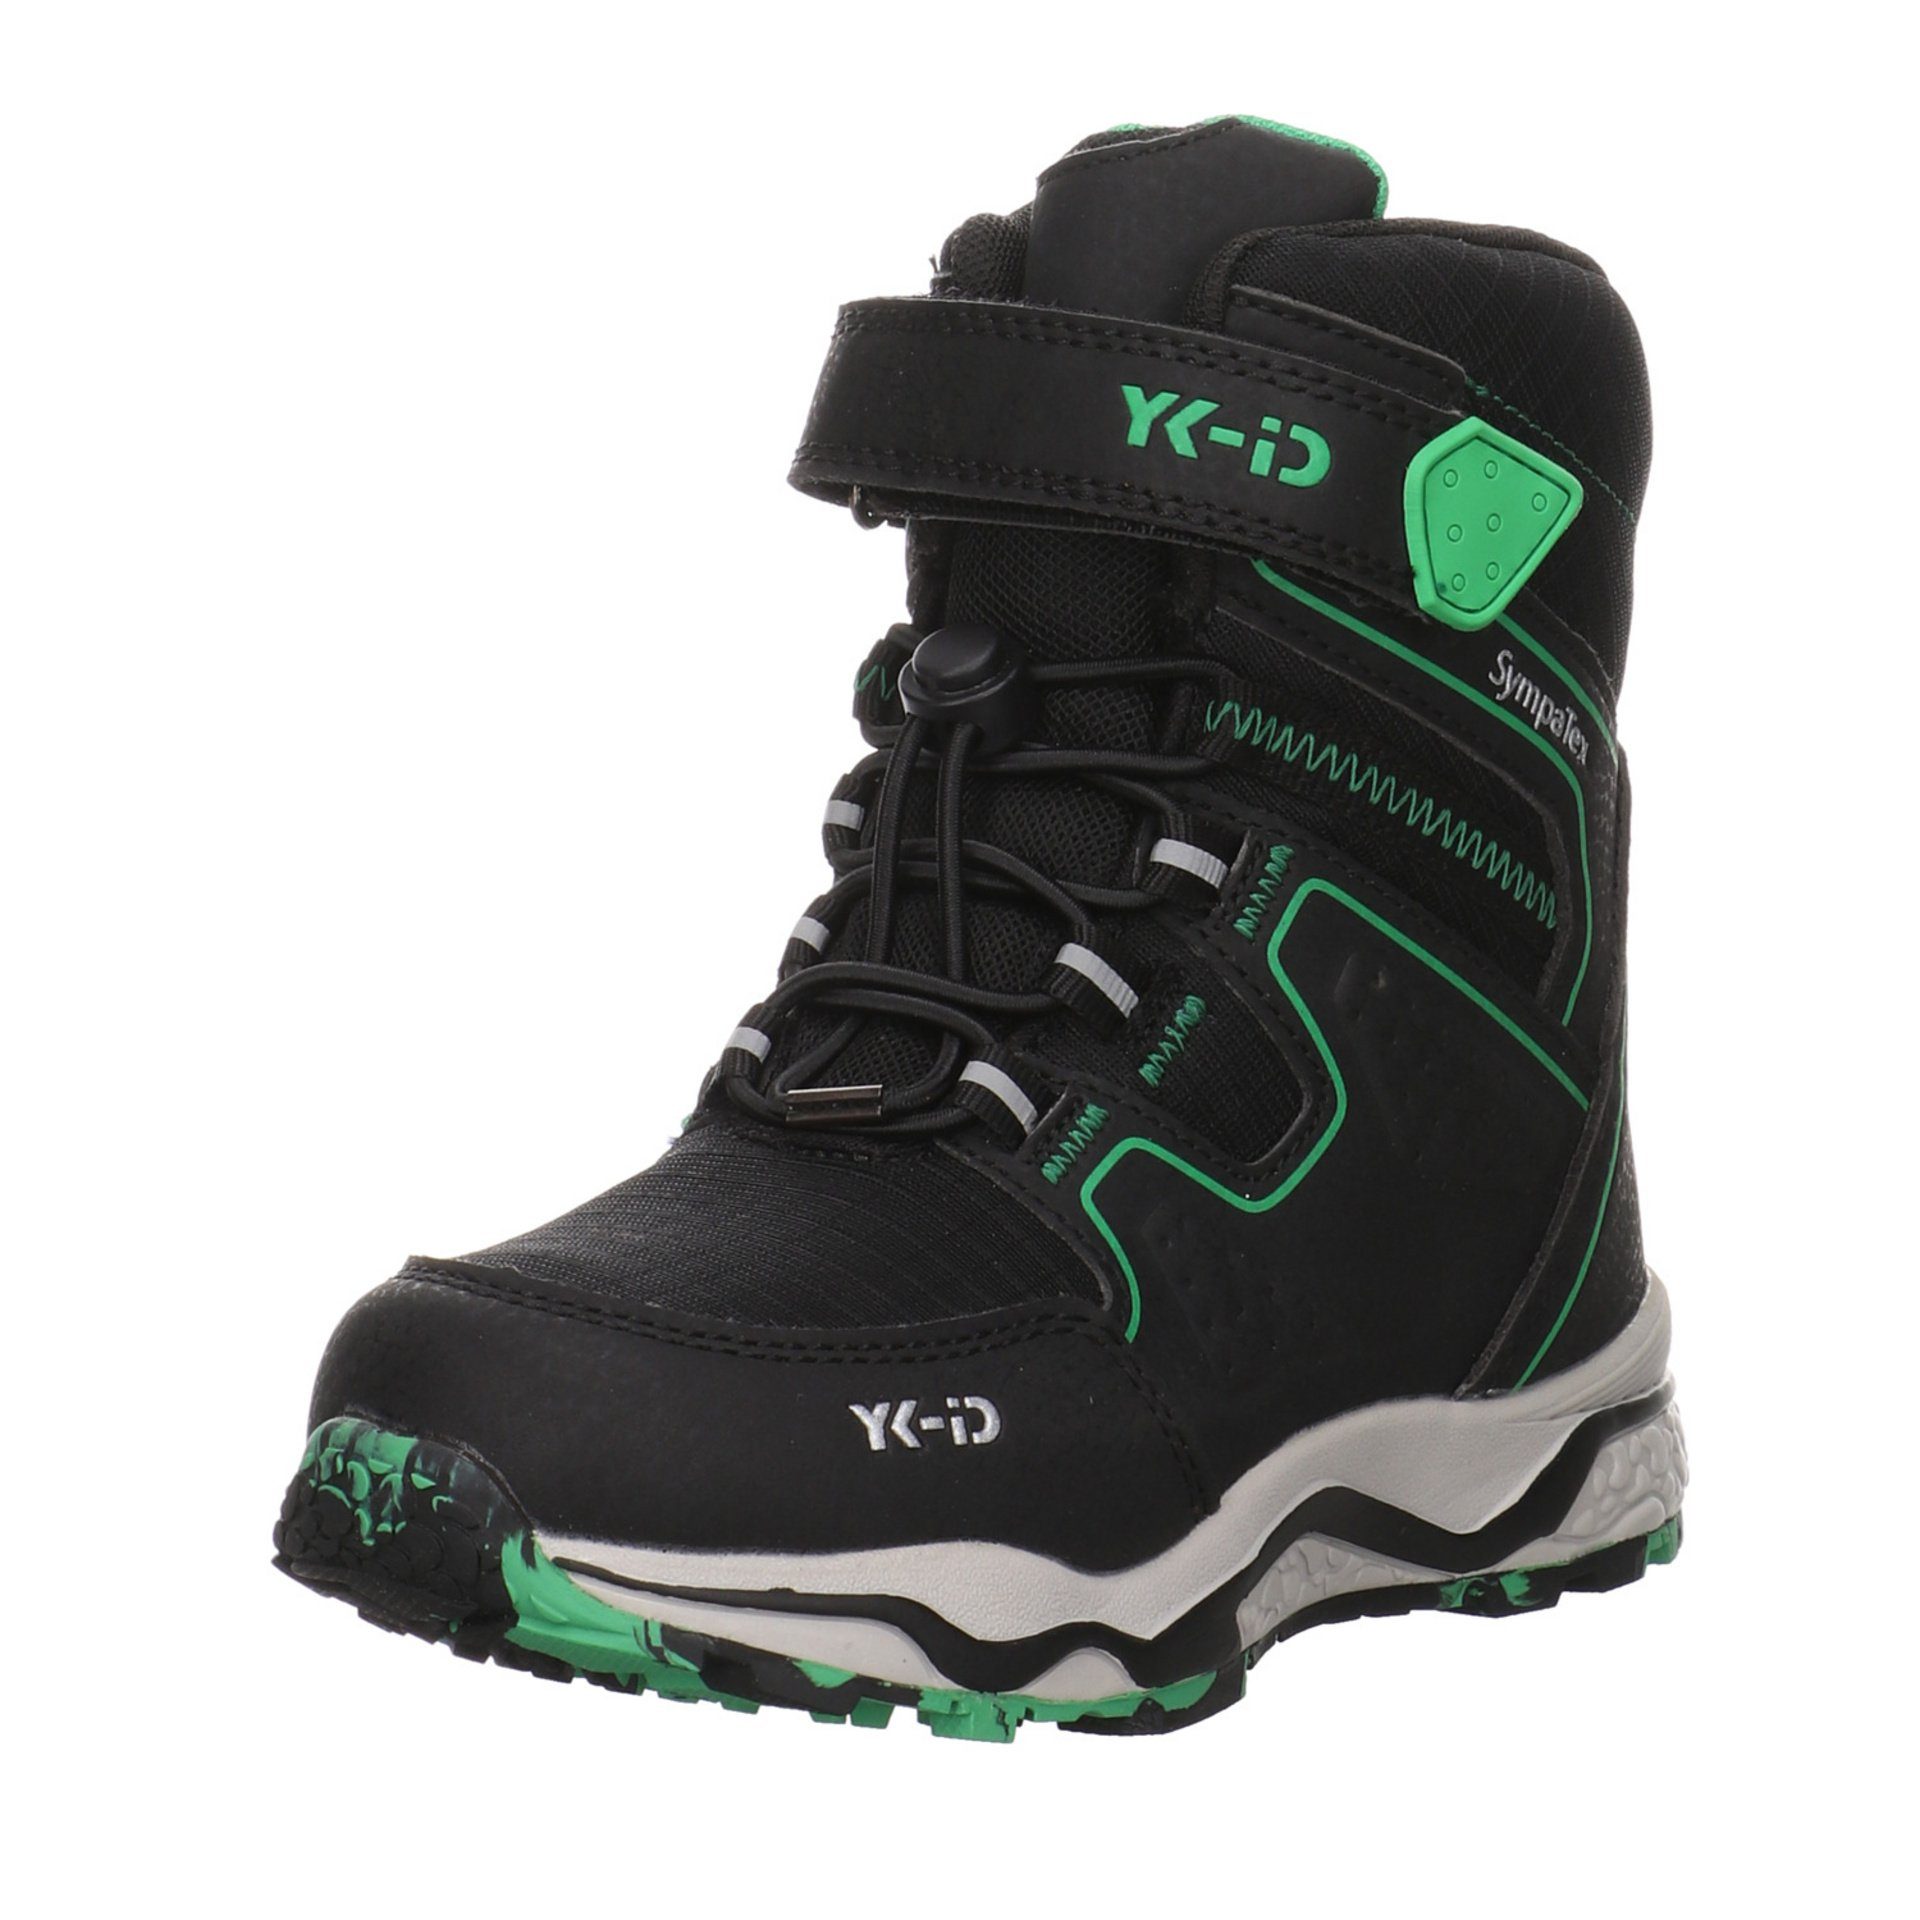 YK-ID Stiefel green Lurchi Lucian-Tex Salamander Stiefel Schuhe black by Boots Jungen Synthetikkombination